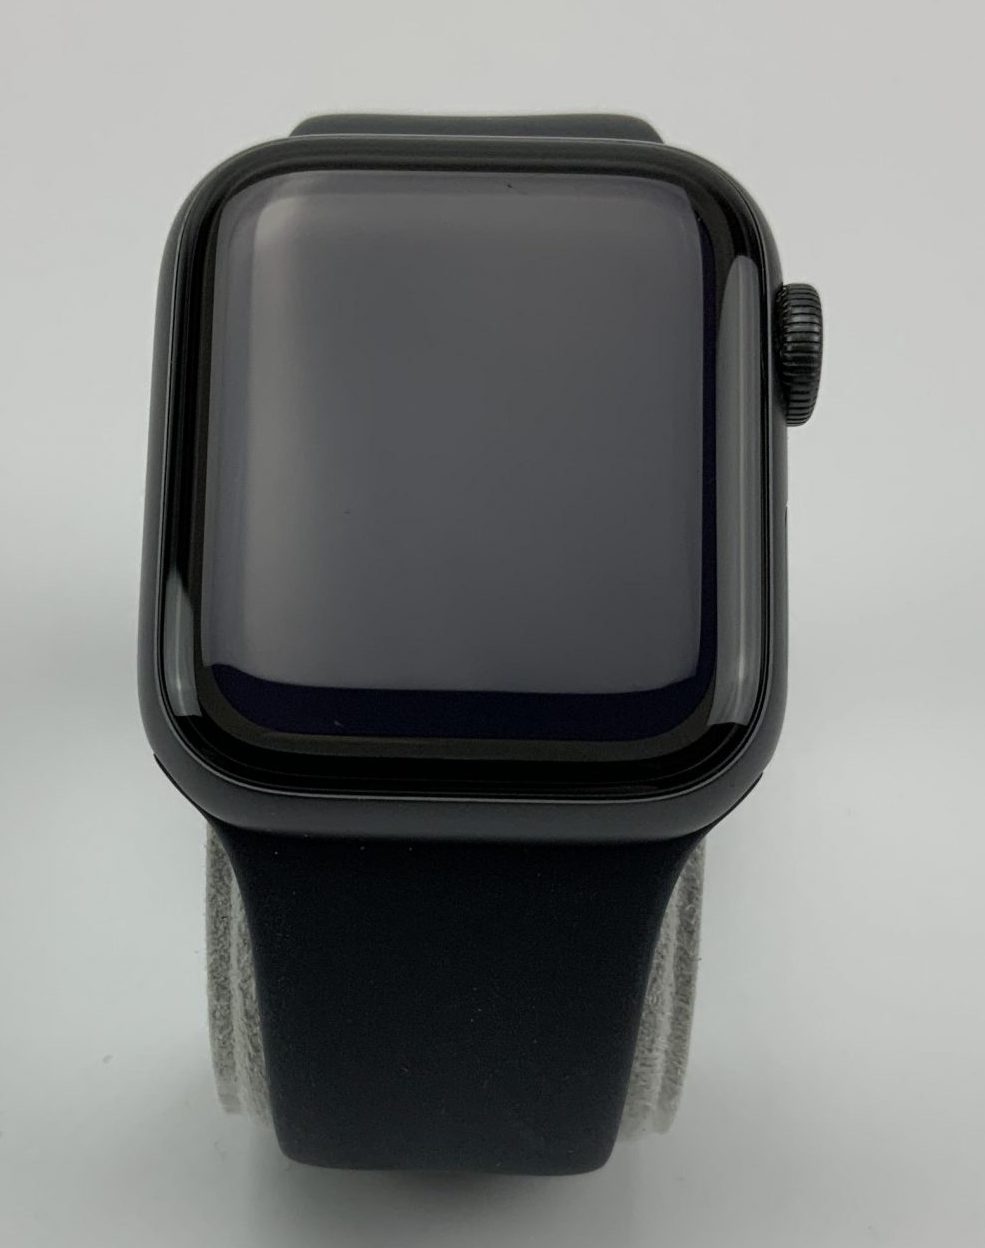 Watch Series 5 Aluminum Cellular (40mm), Space Gray, imagen 1